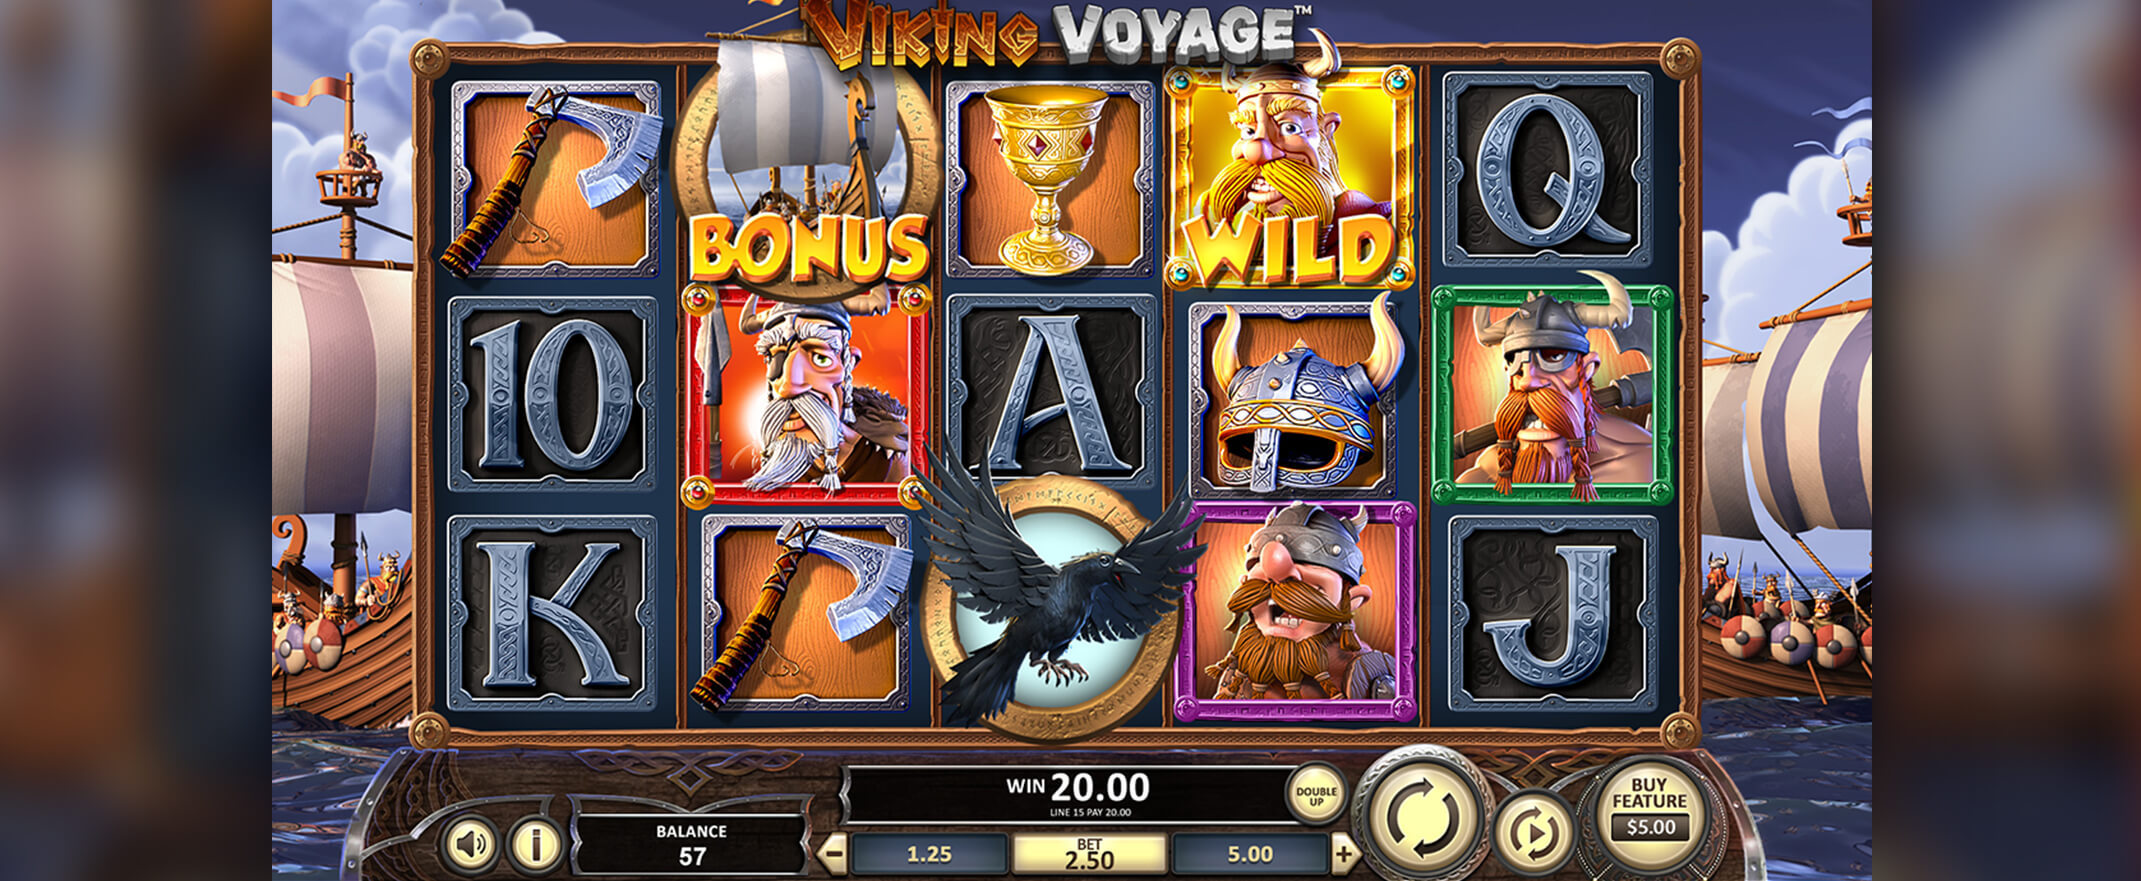 Viking Voyage peliautomaatti Betsoftilta